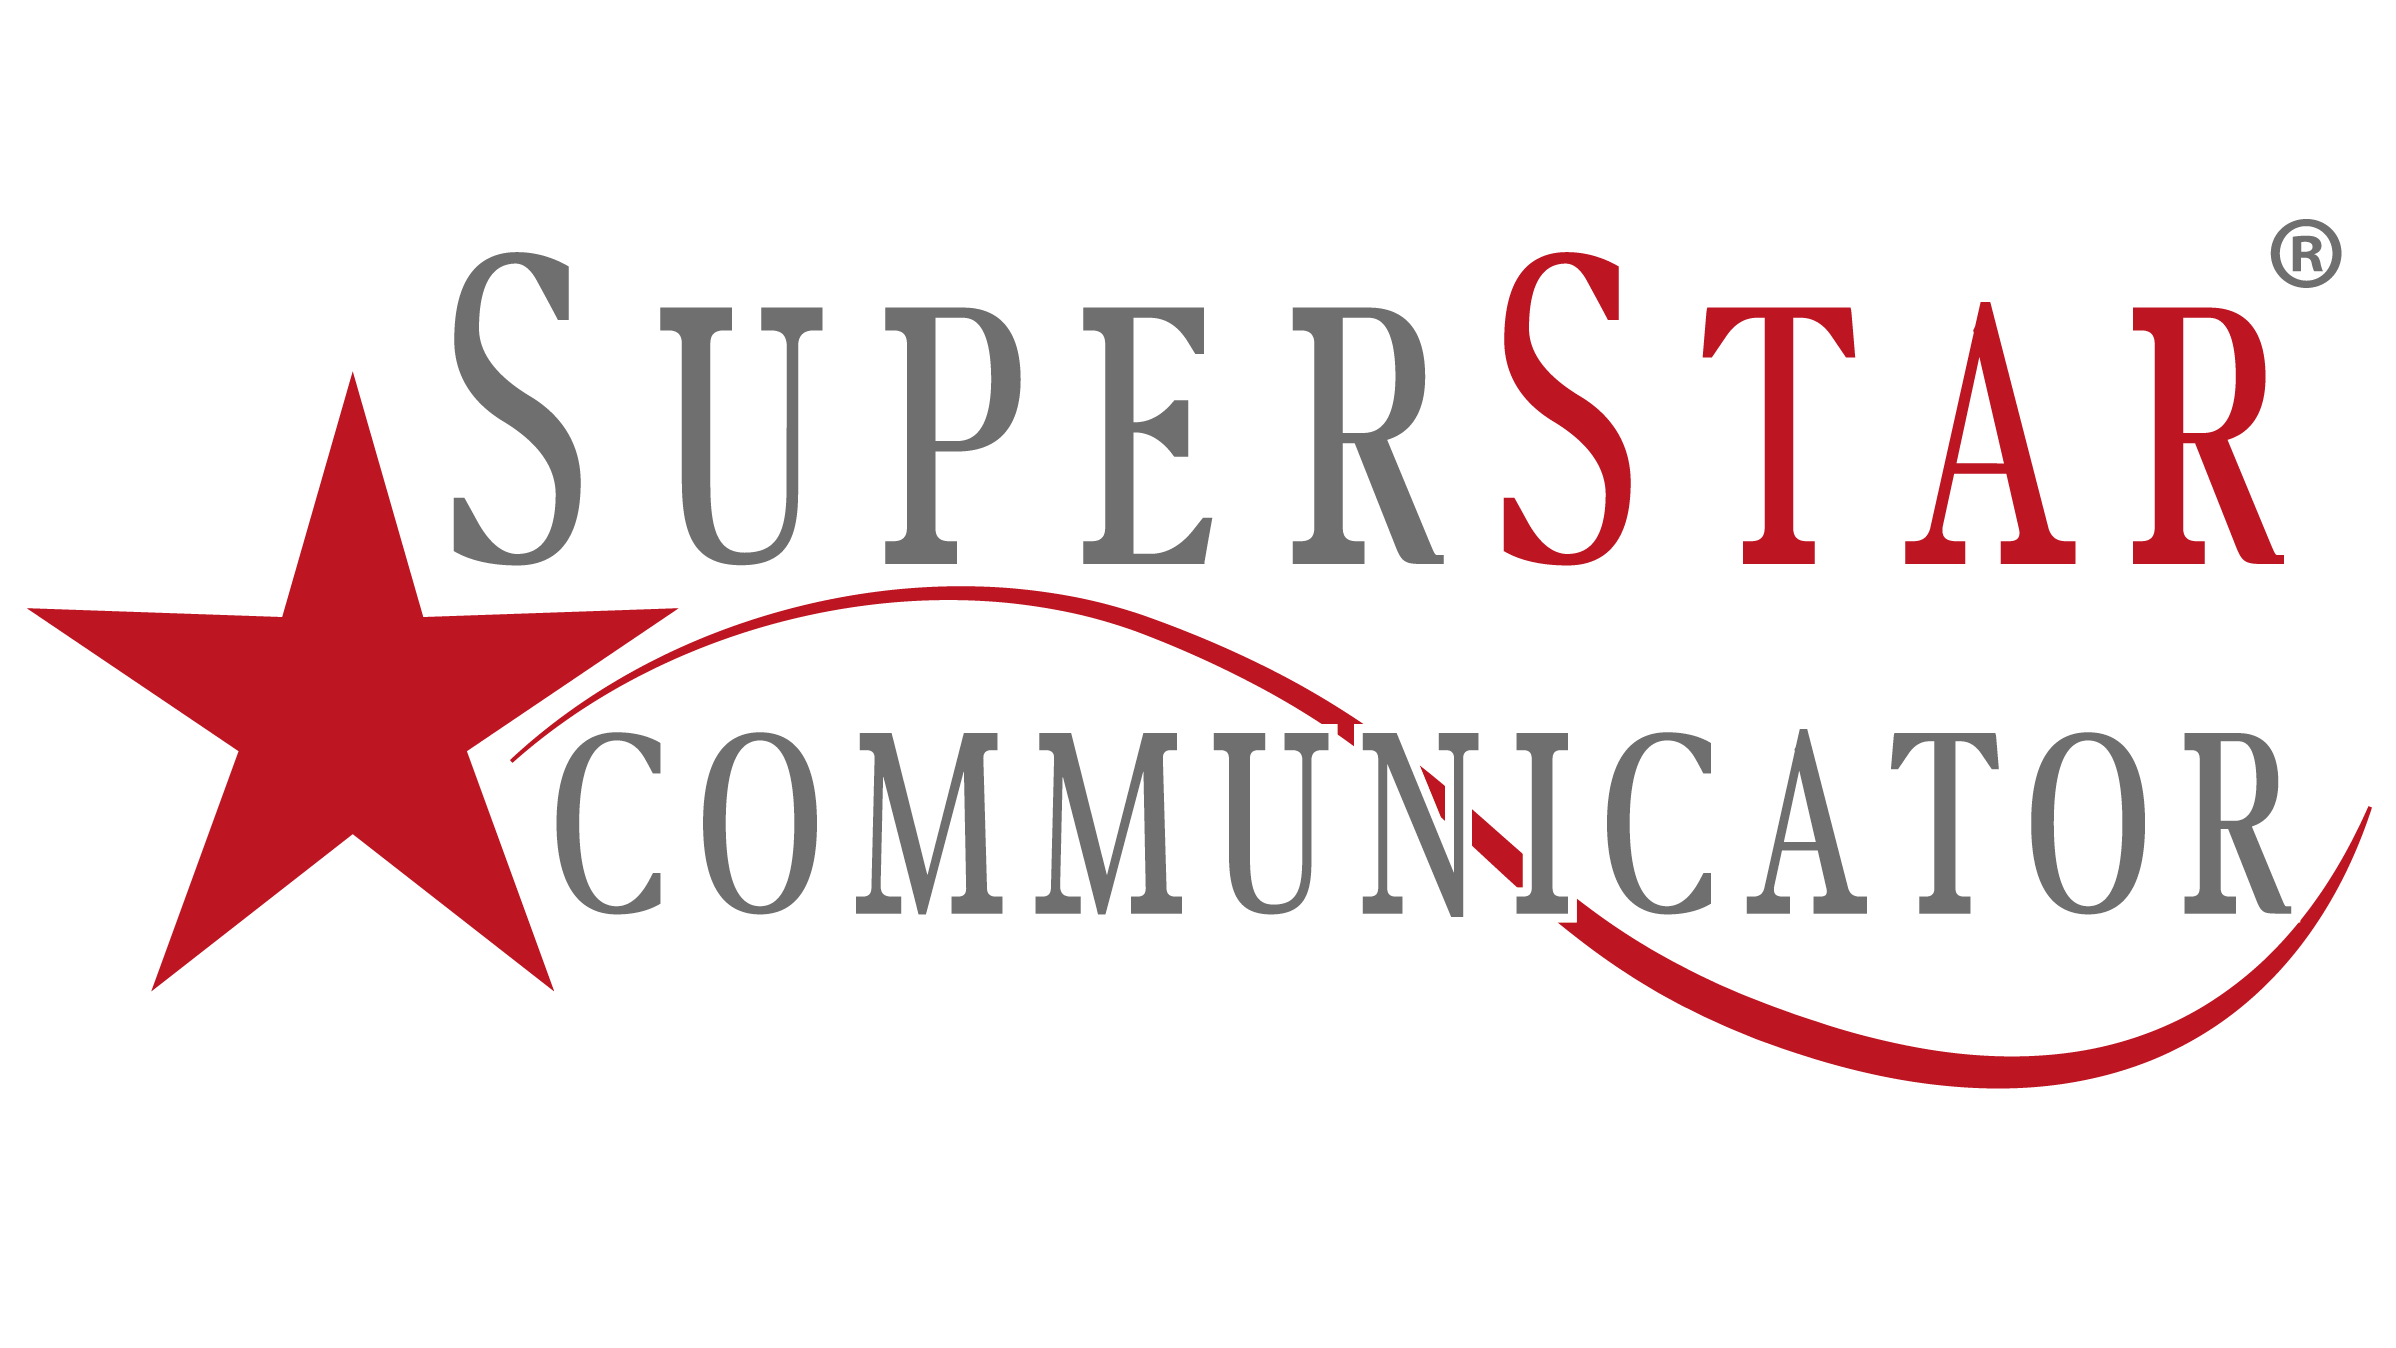 superstar communicator logo cmyk R 01